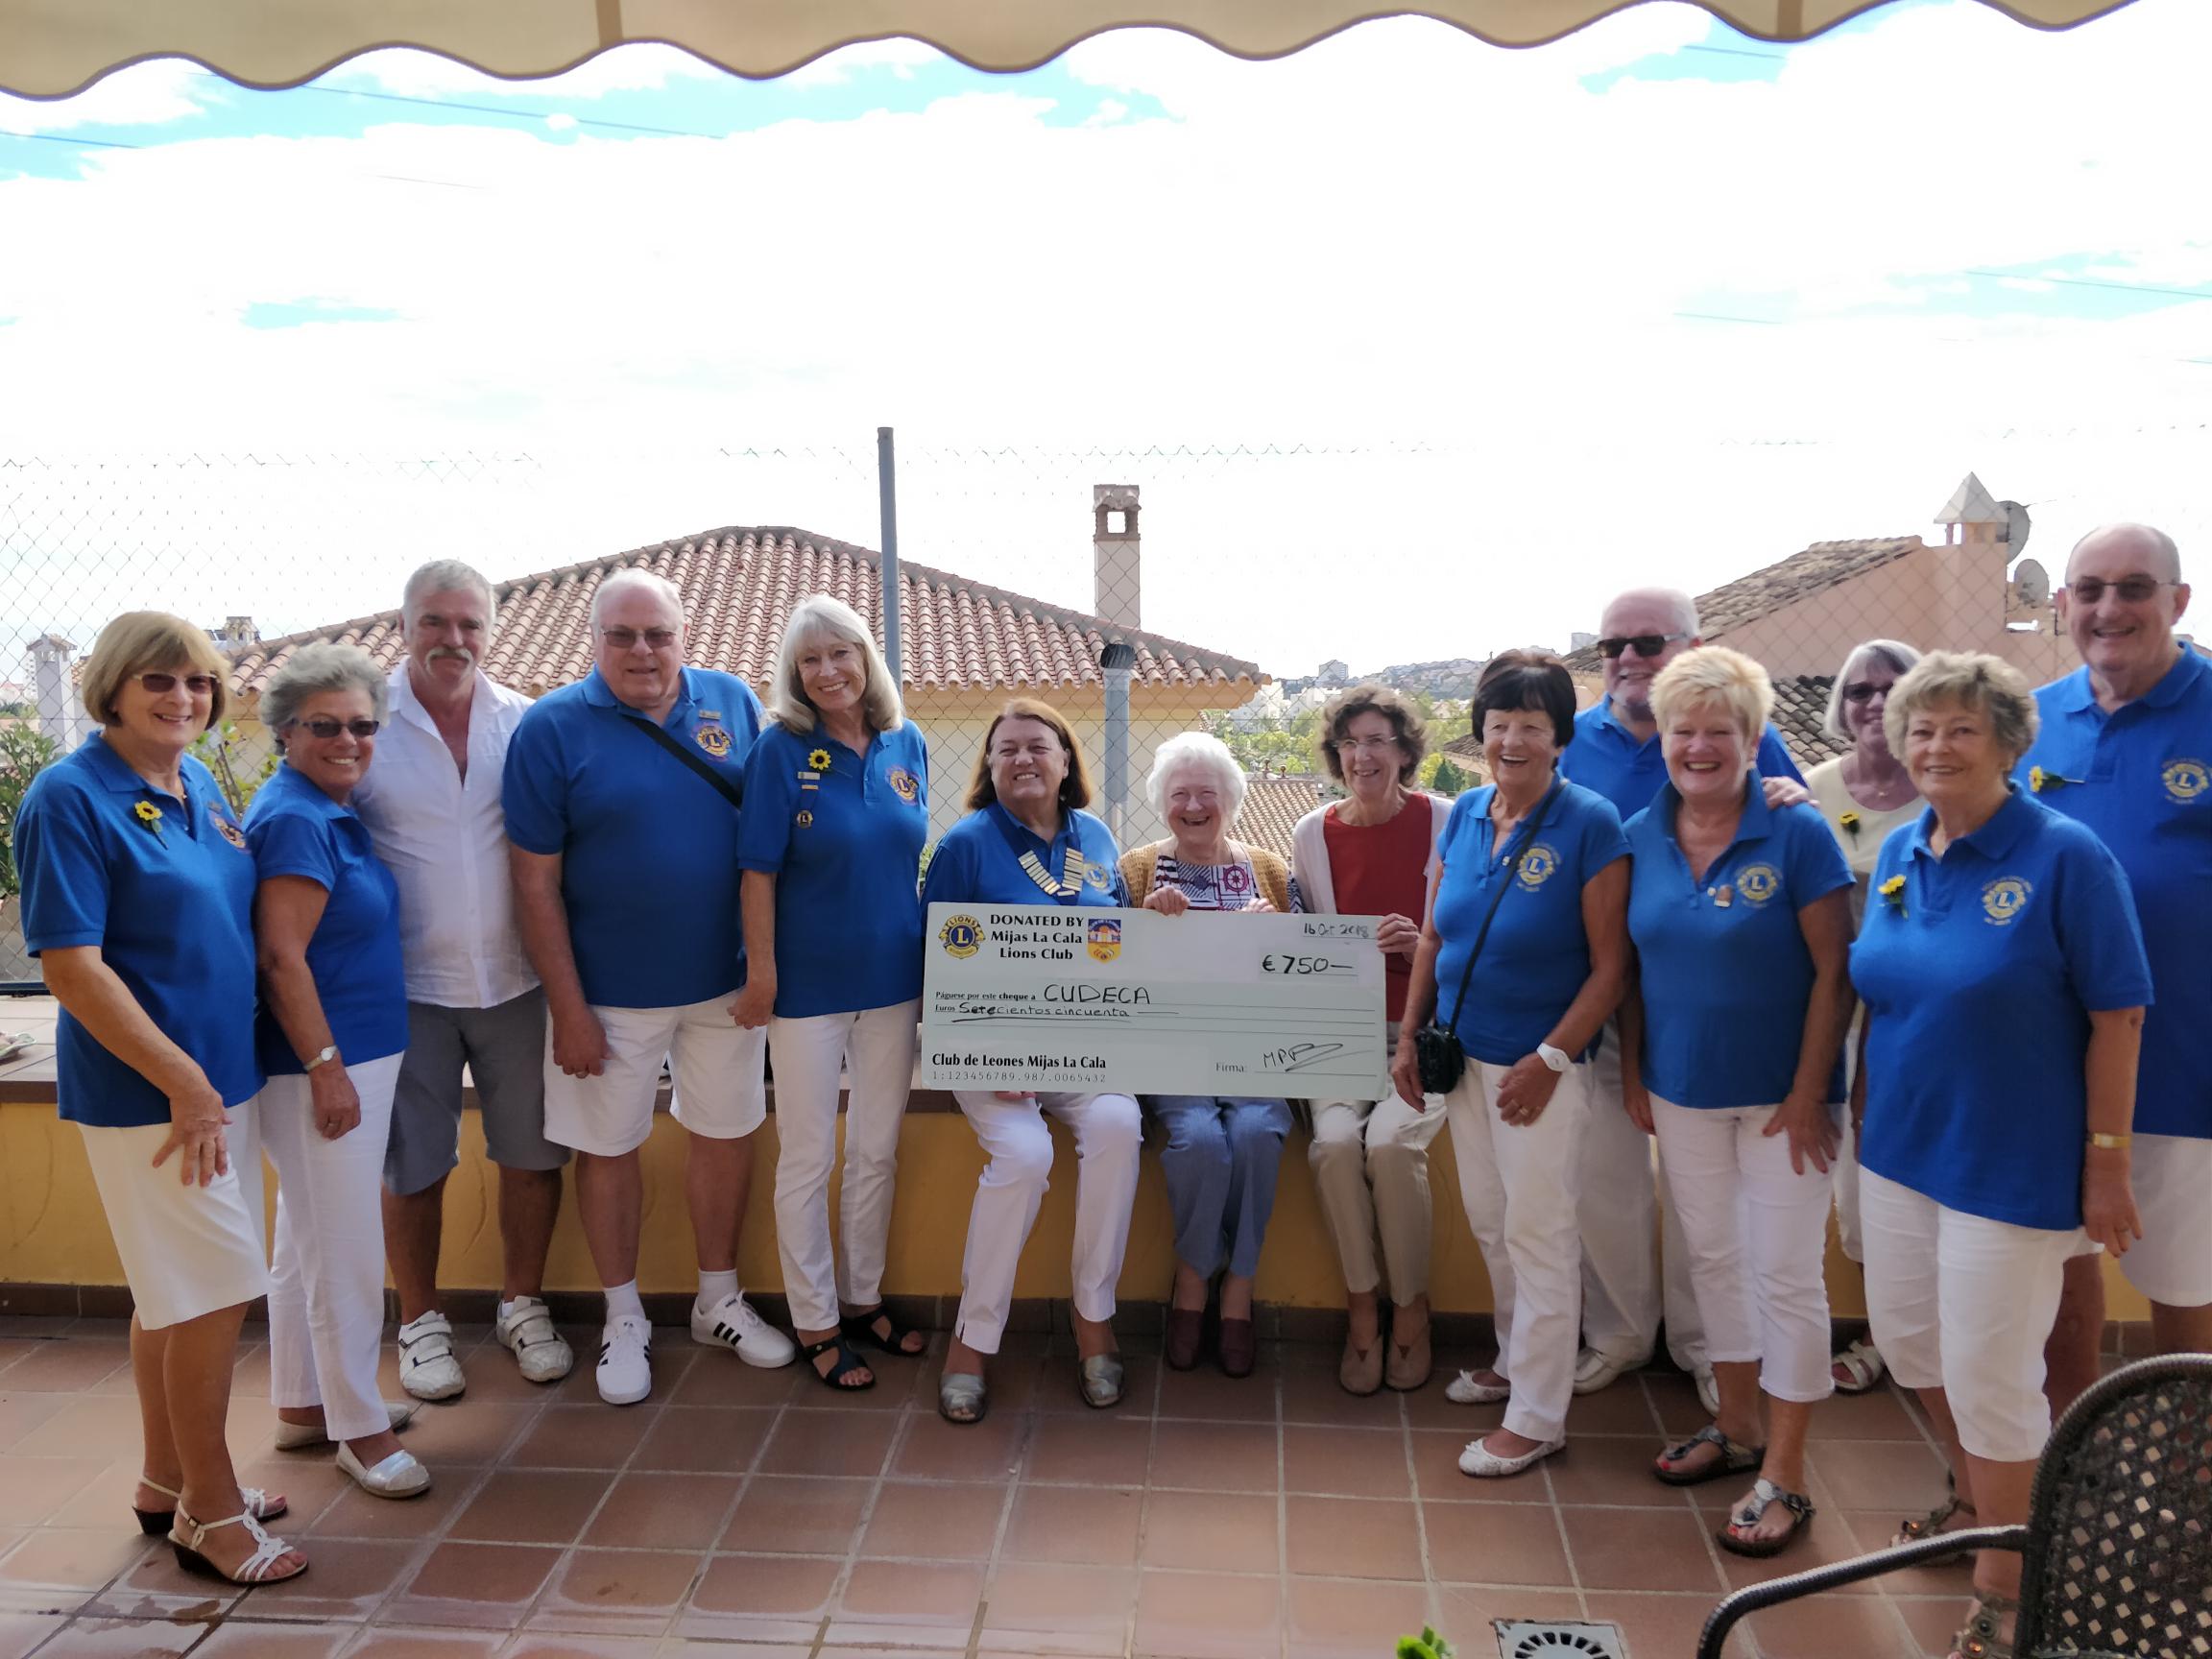 Donation from Lions Club of La Cala de Mijas